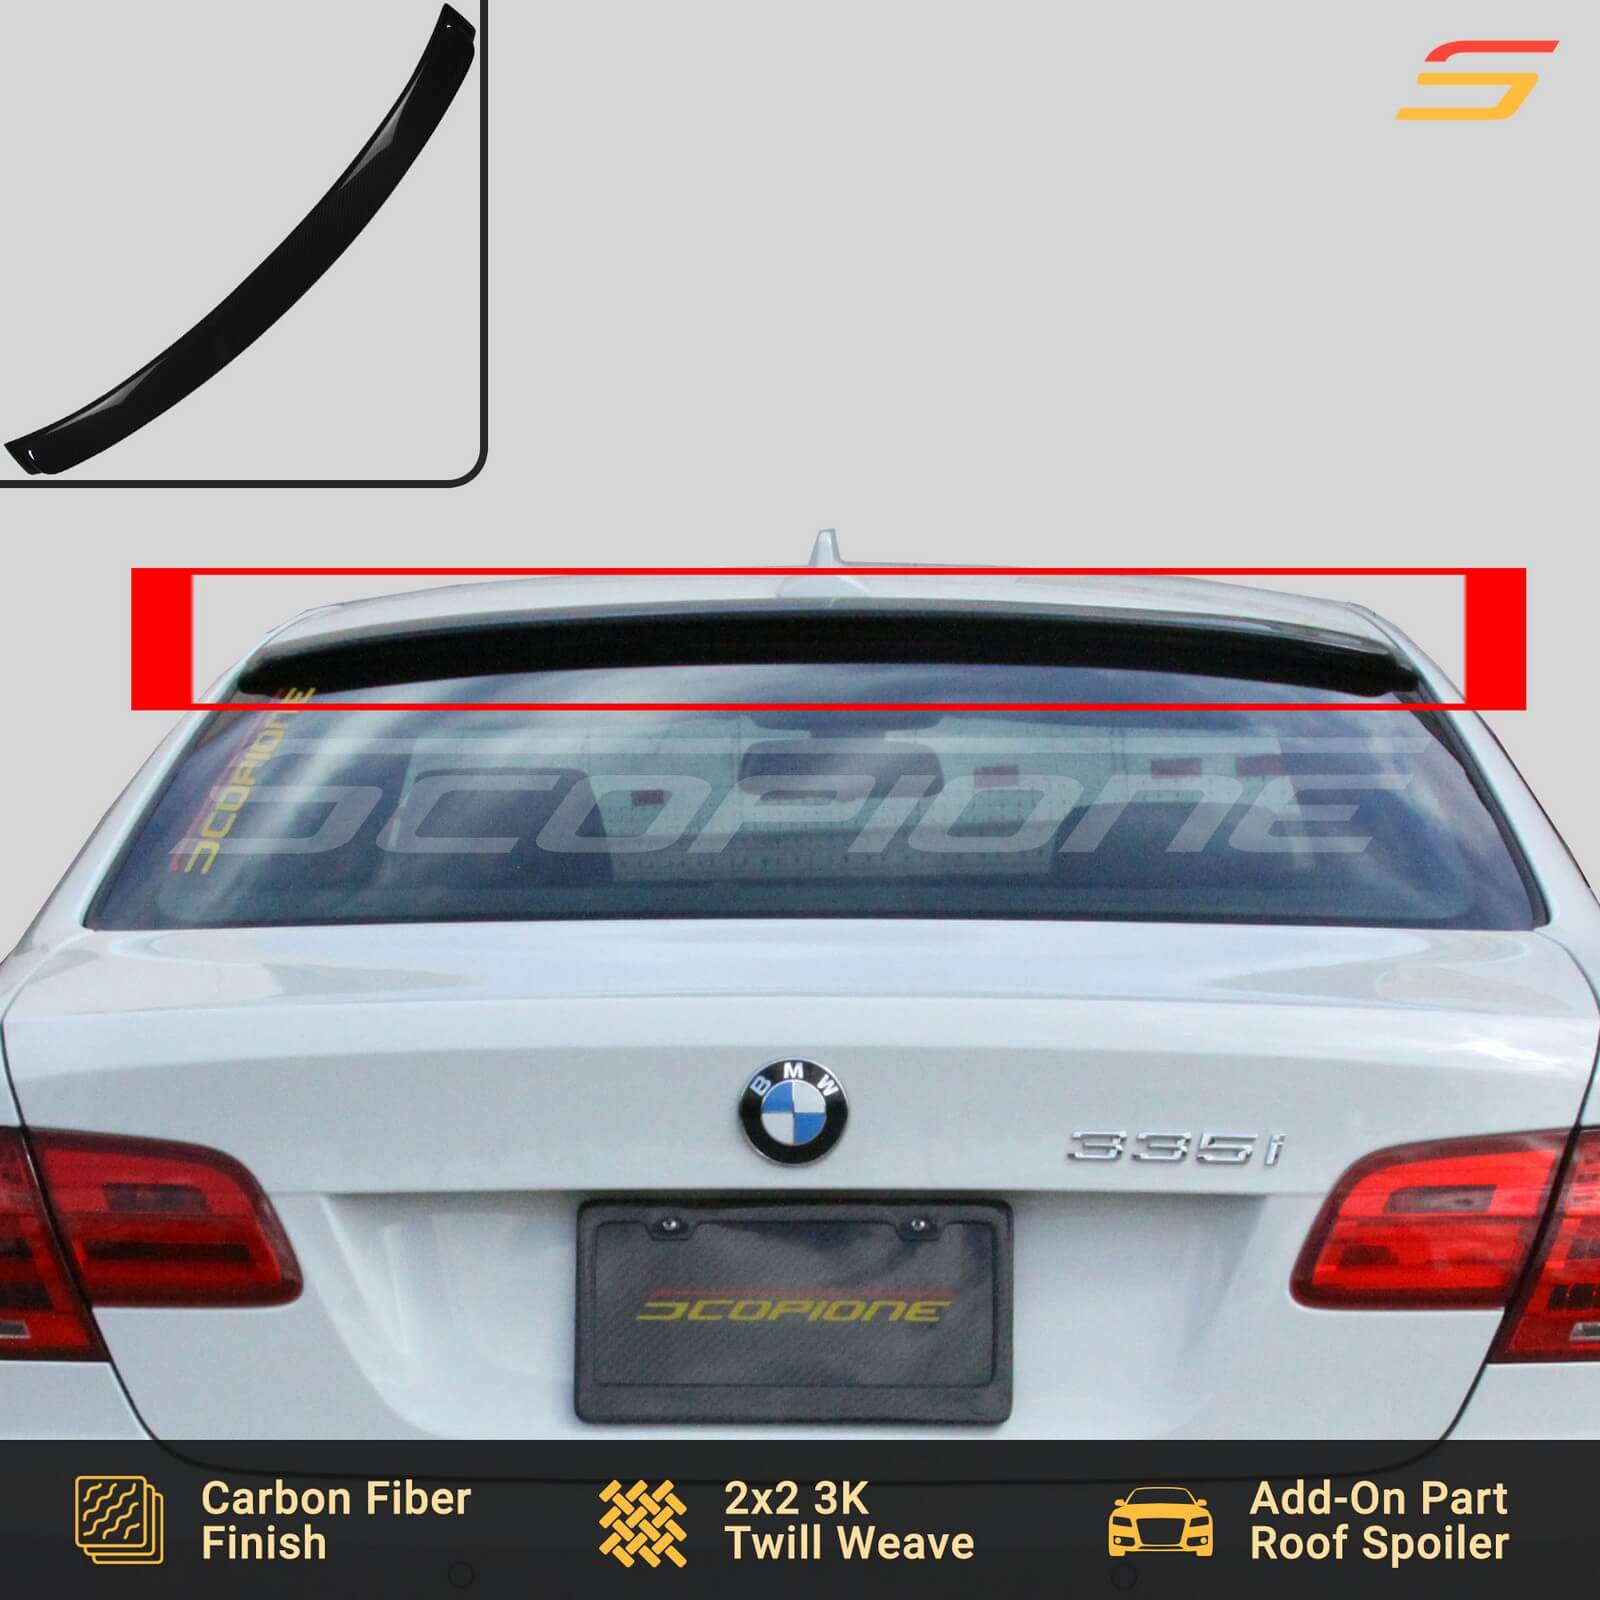 Scopione Carbon Fiber Rear Roof Spoiler for BMW 3 Series E92 Coupe